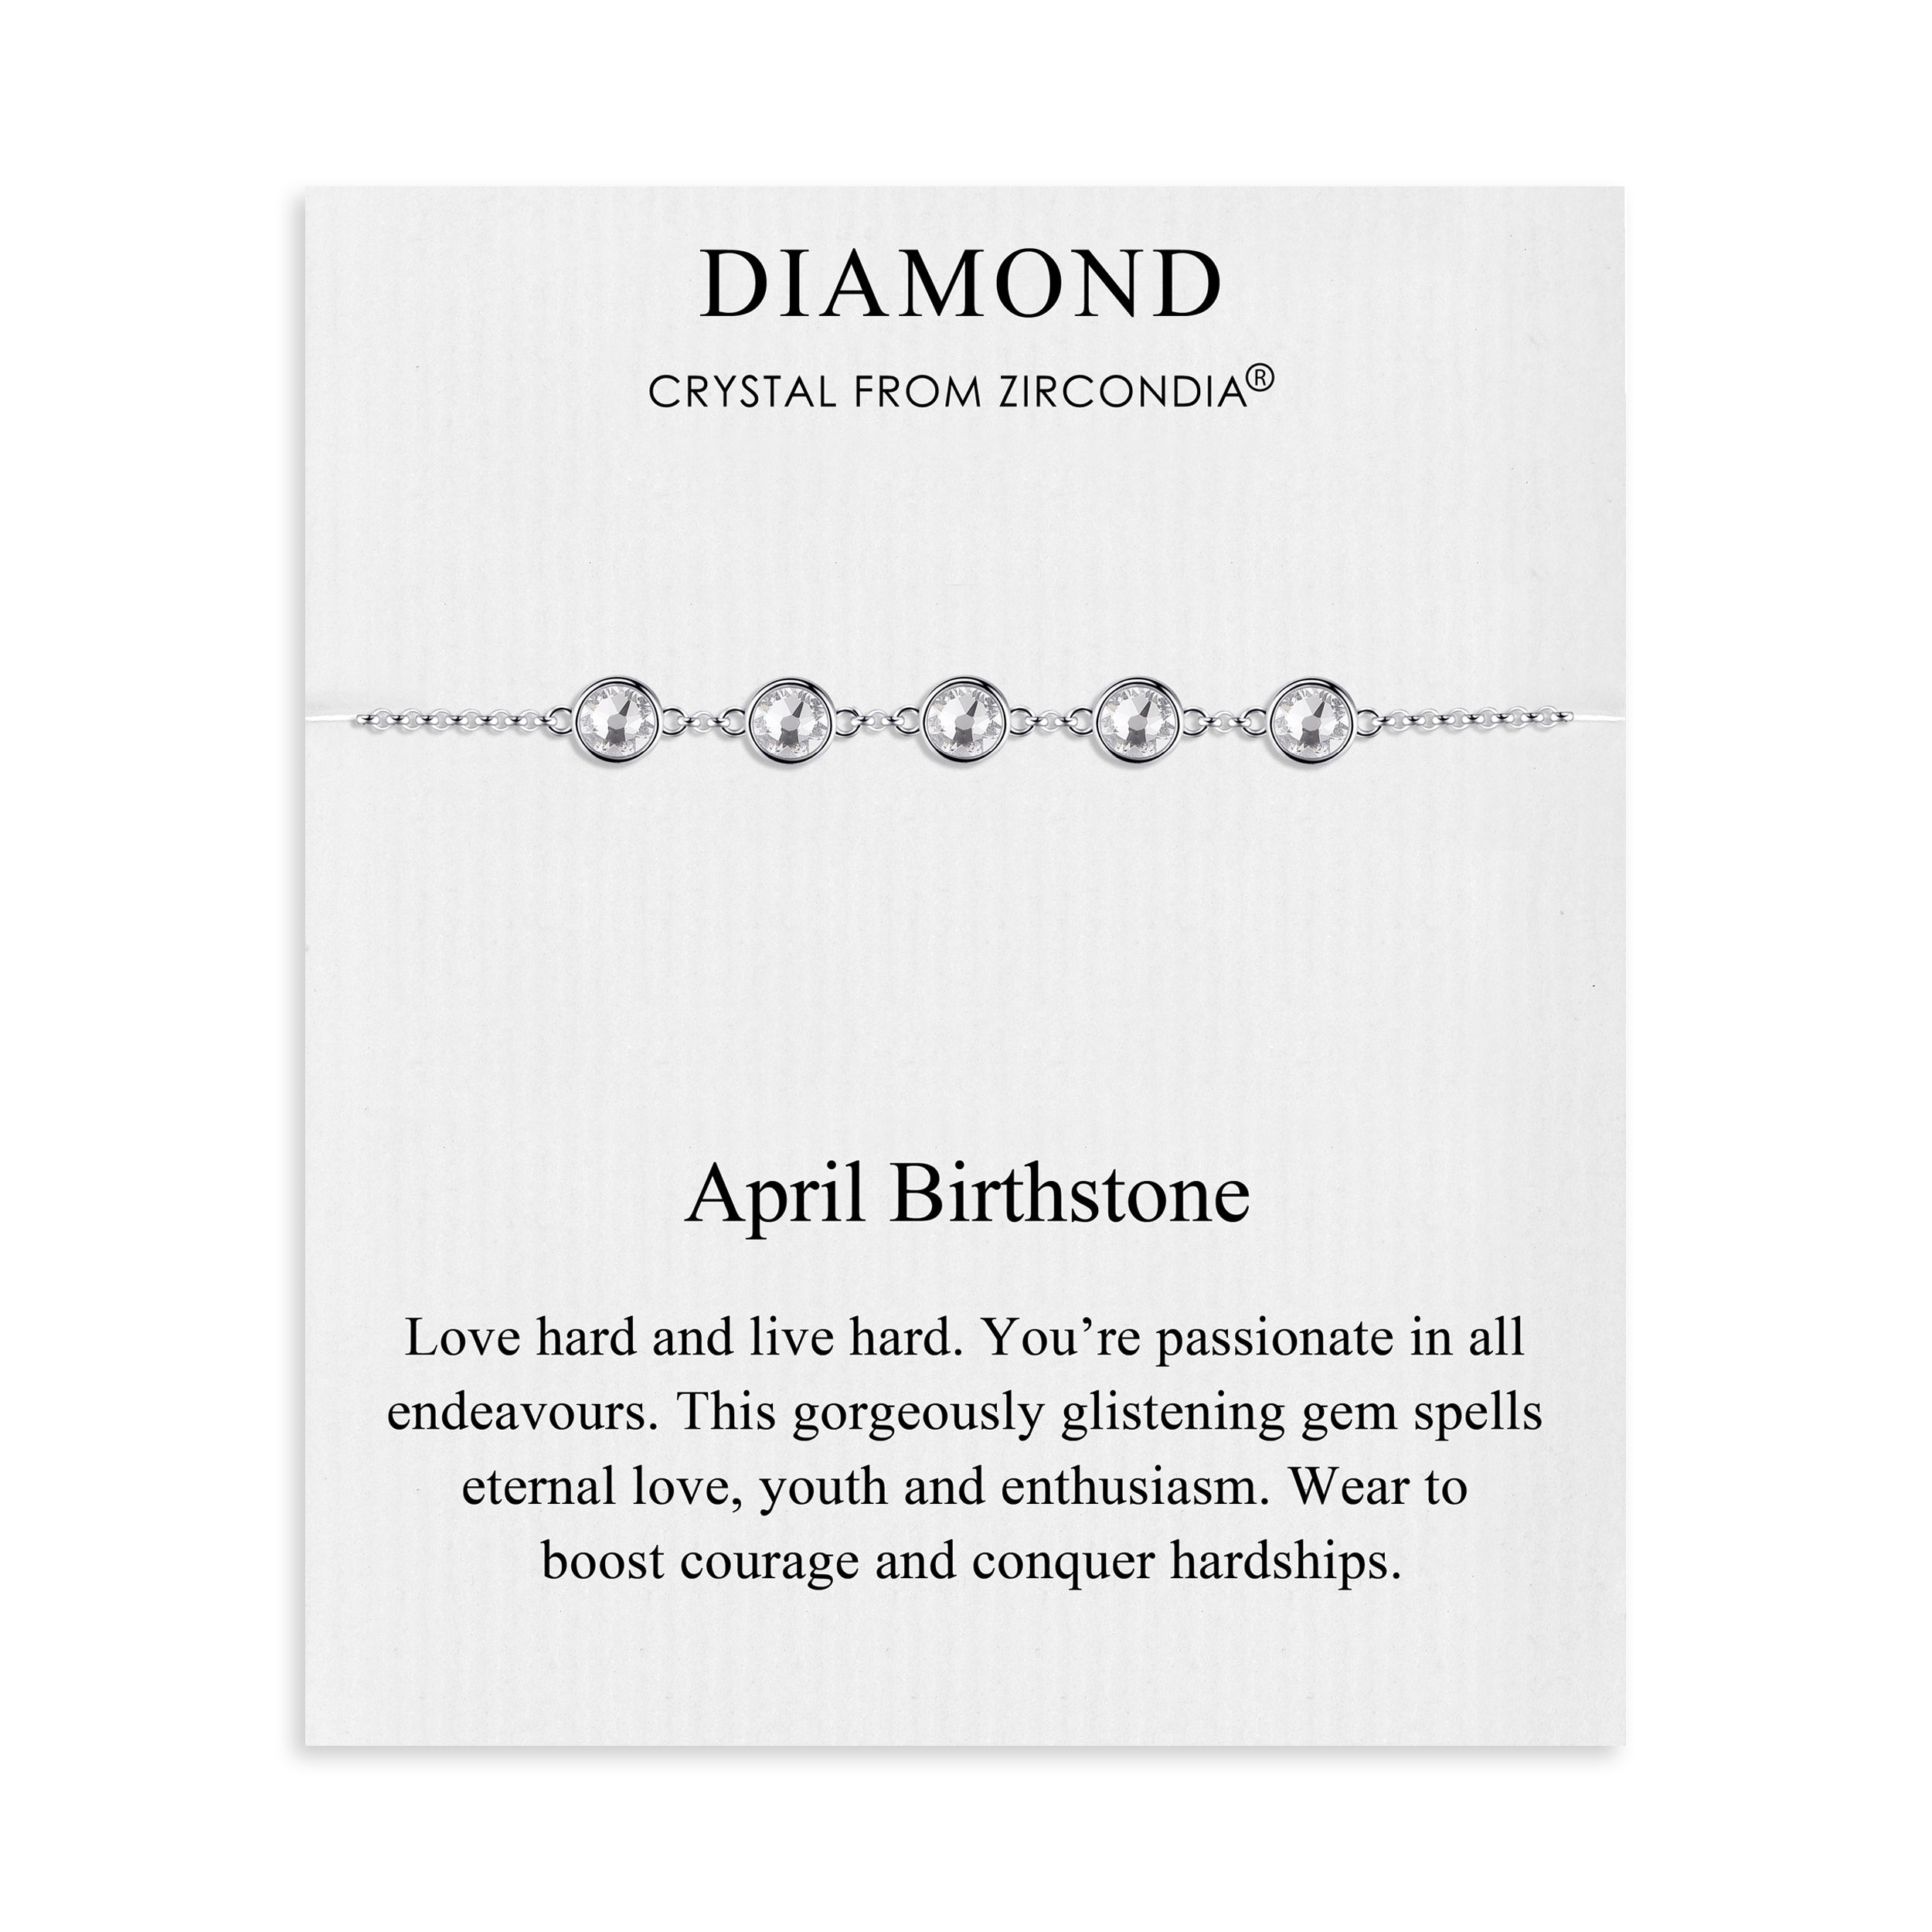 April Birthstone Bracelet Created with Diamond Zircondia® Crystals by Philip Jones Jewellery